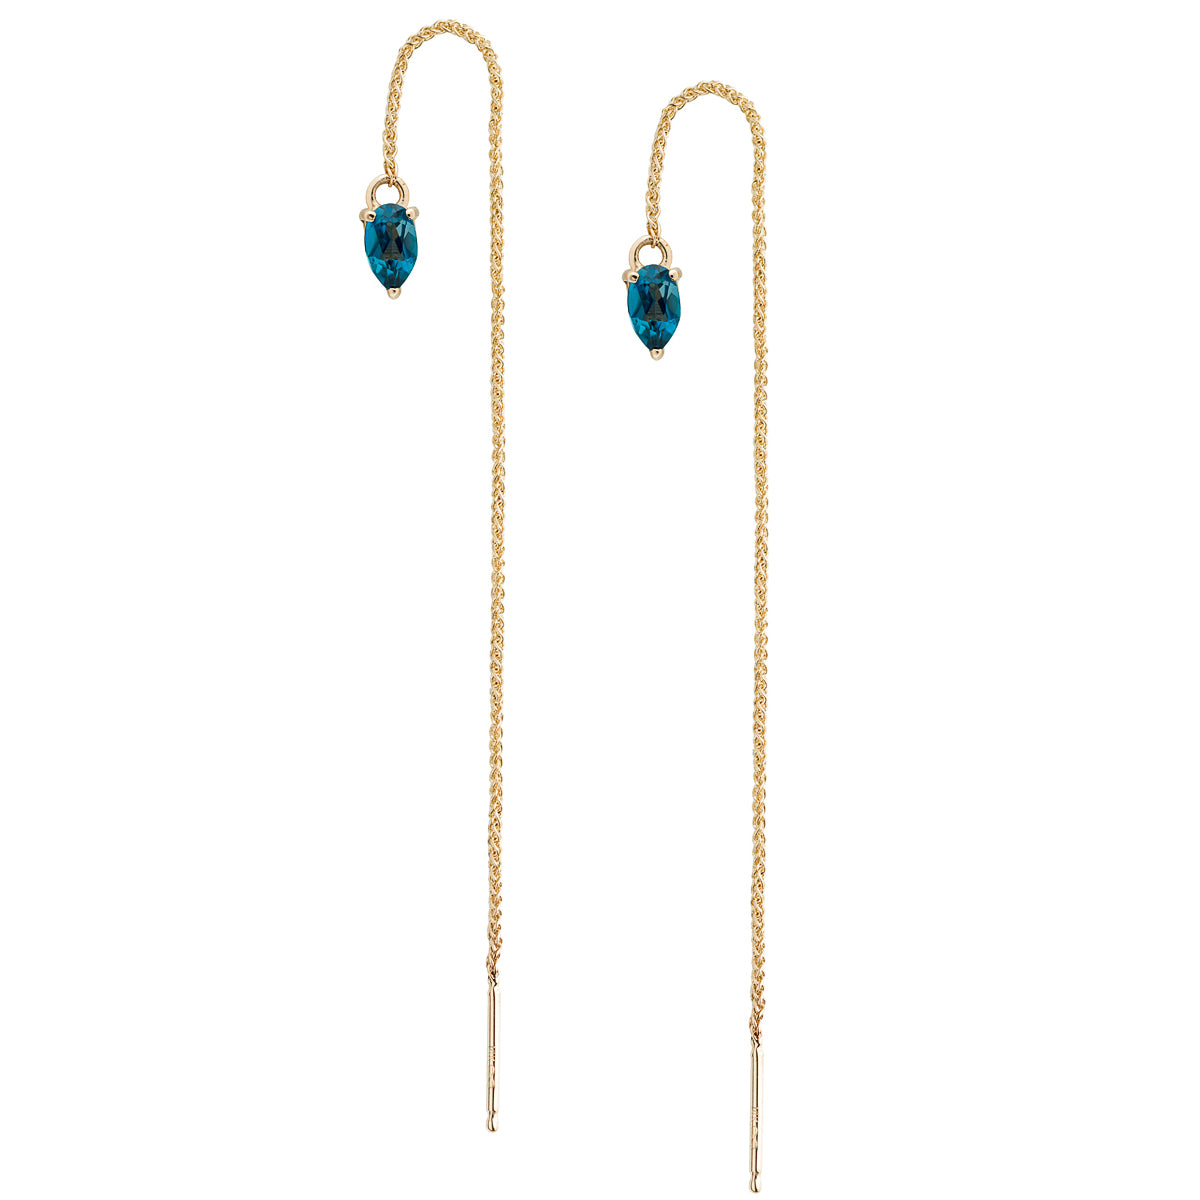 IRINI Gem Drop thread earring in 14k gold with pear shape London Blue Topaz gemstone, simple, delicate perfection